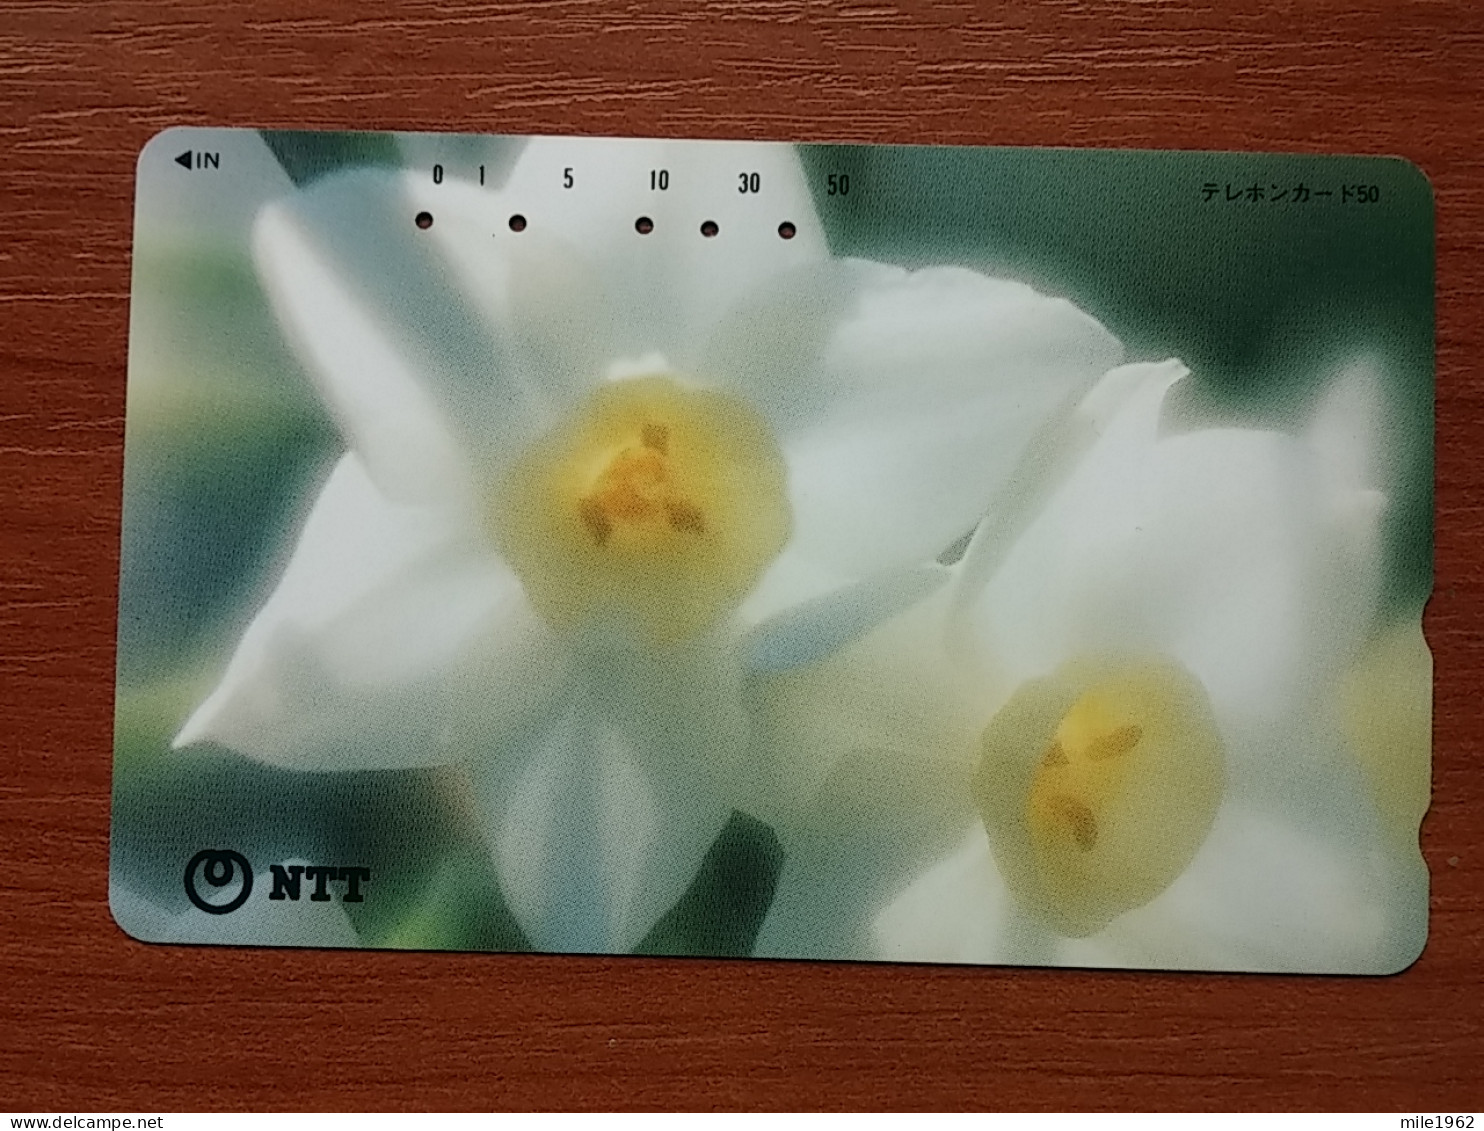 T-385 - JAPAN, Japon, Nipon, TELECARD, PHONECARD, Flower, Fleur, NTT 111-090 - Fleurs